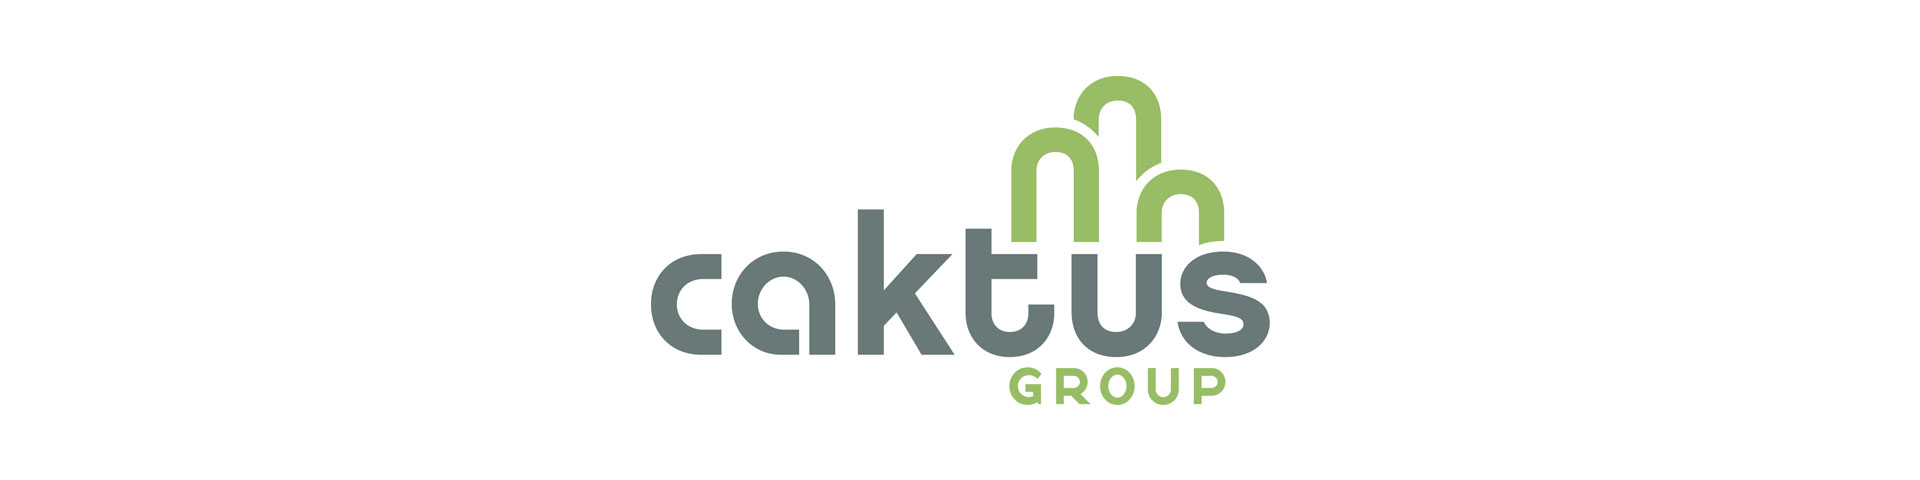 Caktus Group